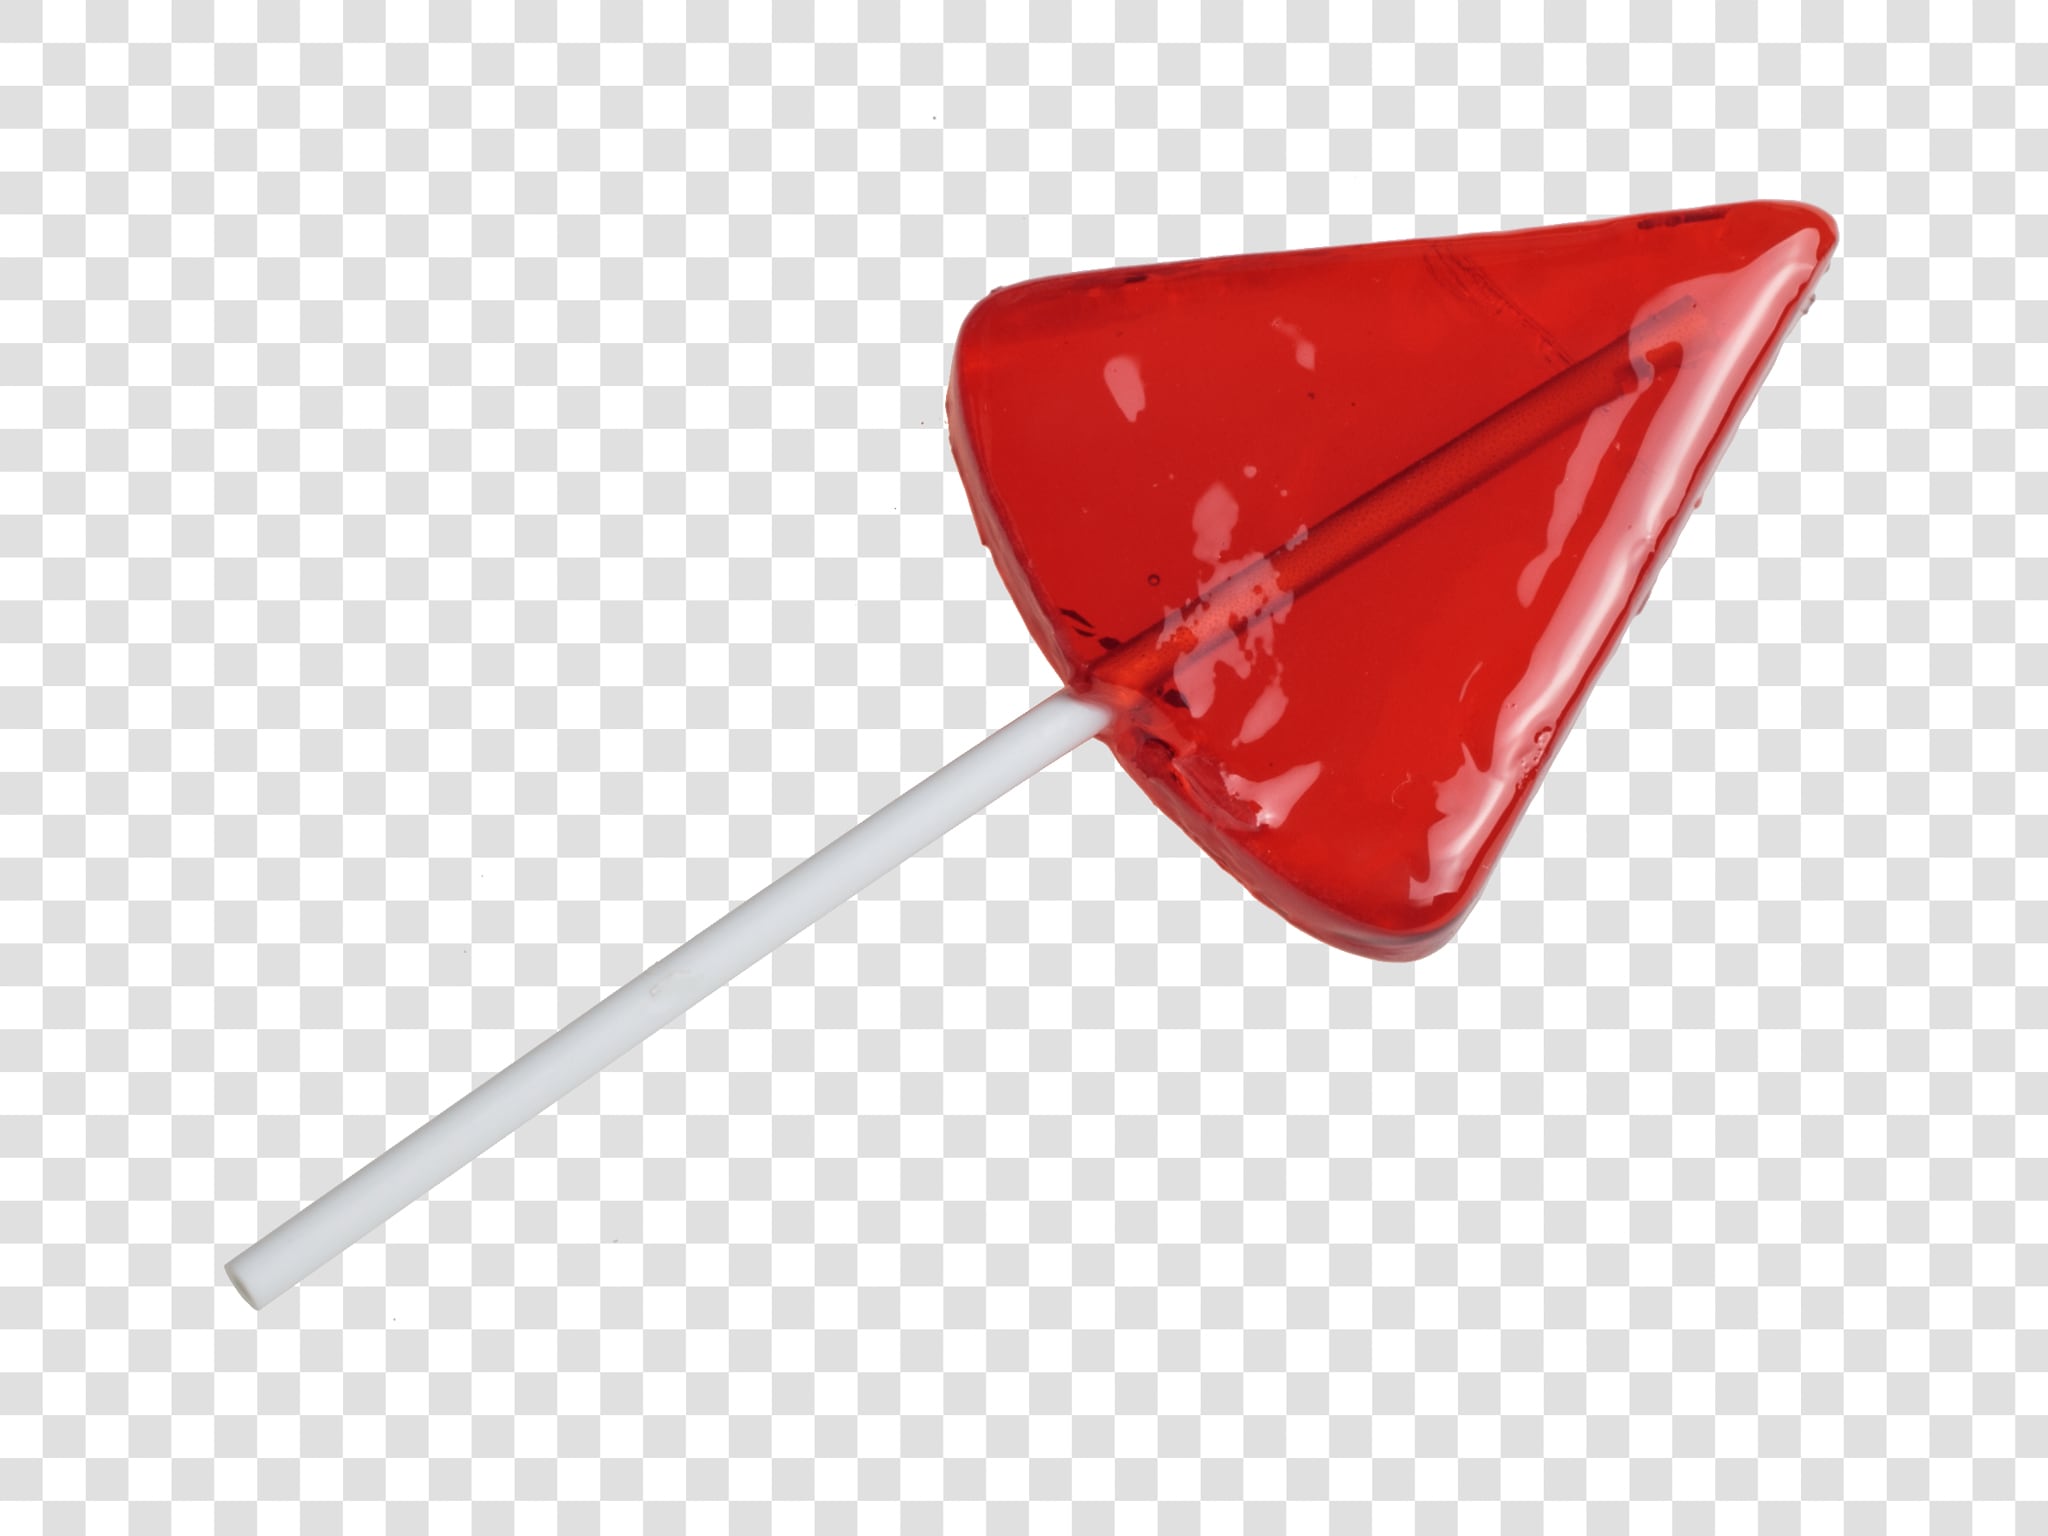 Lollipop image asset with transparent background